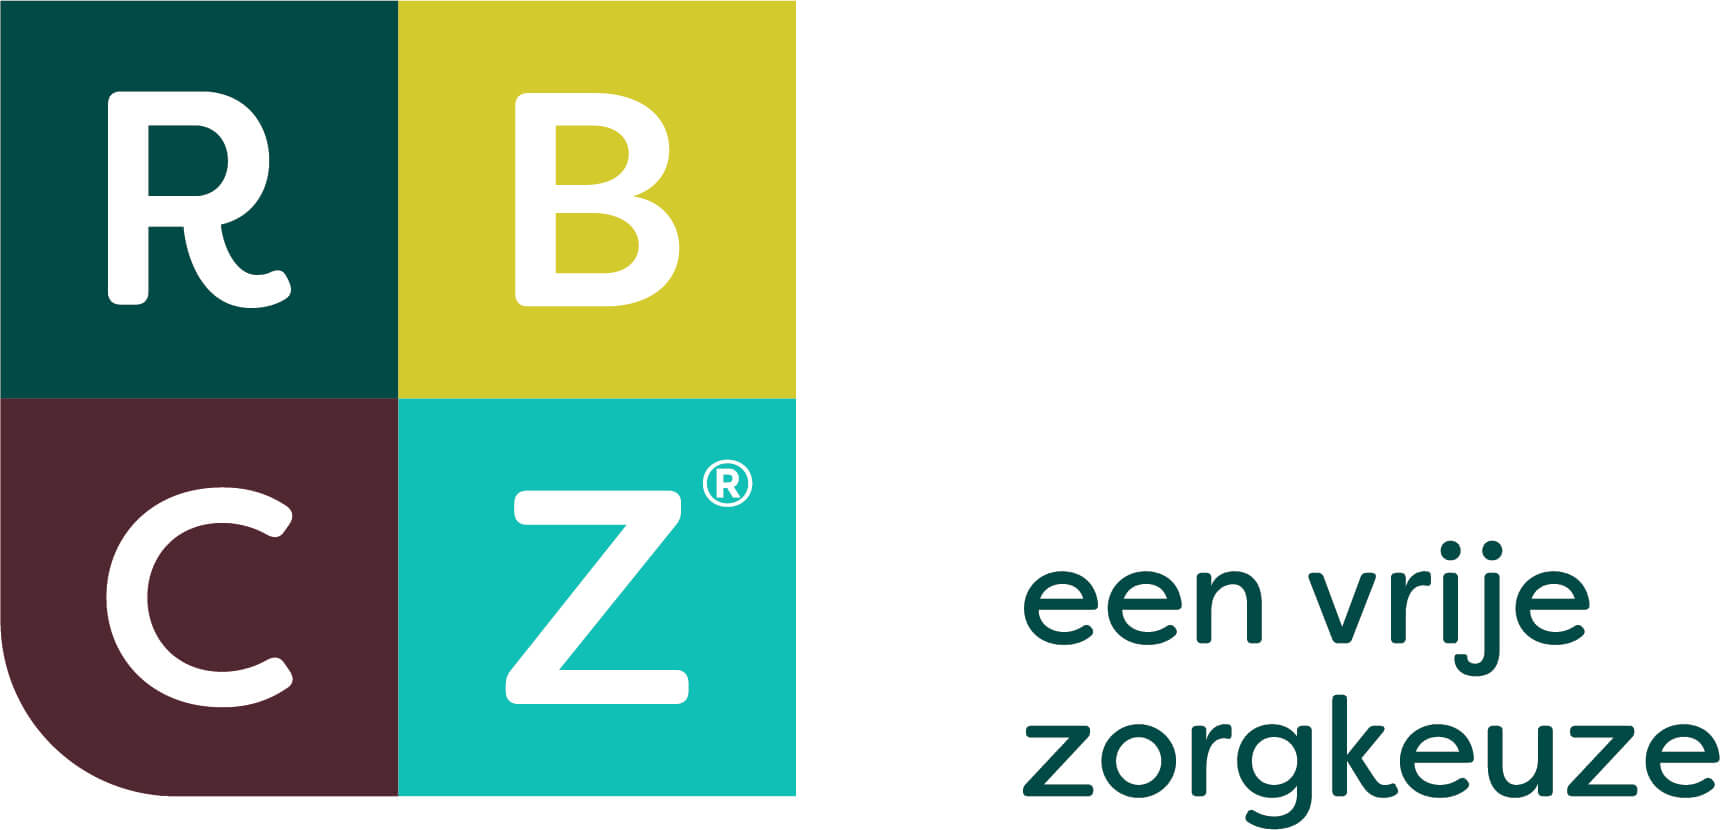 RBCZ logo CMYK payoff